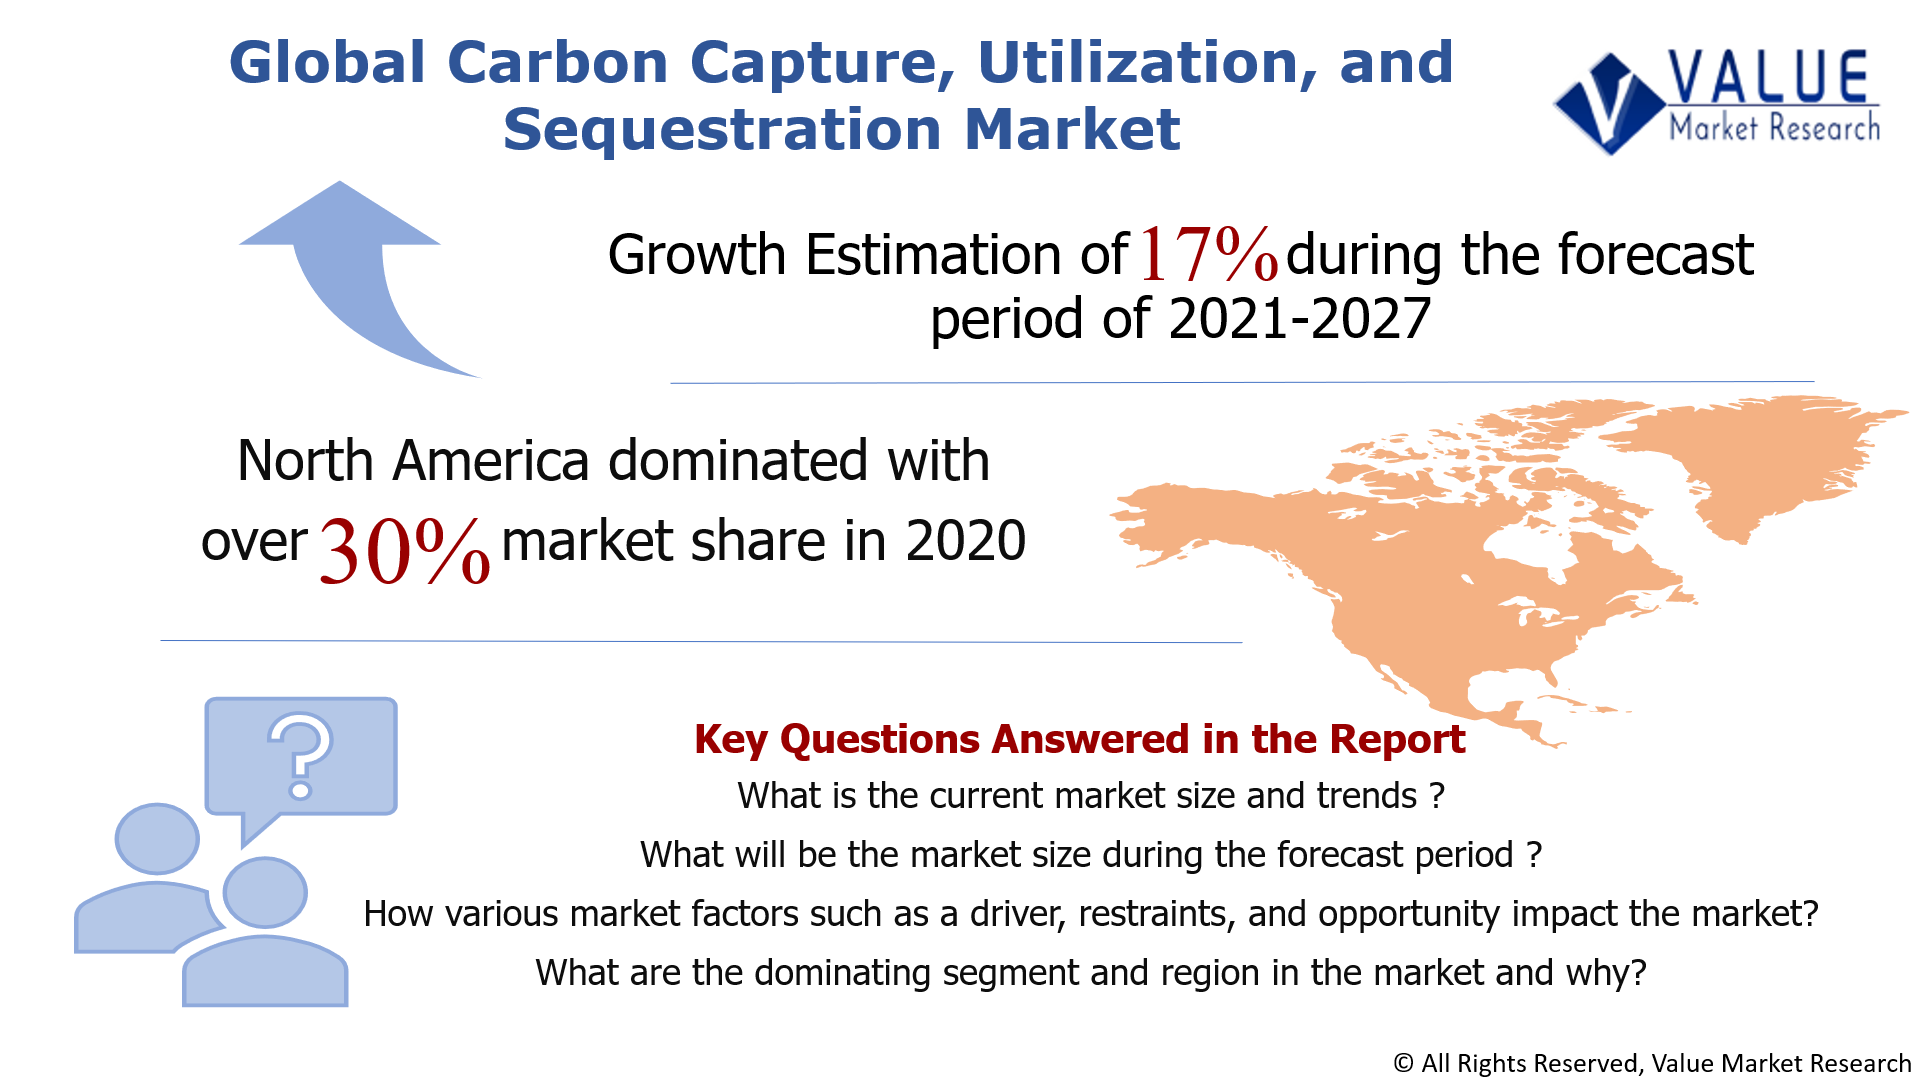 Global Carbon Capture, Utilization, and Sequestration Market Share